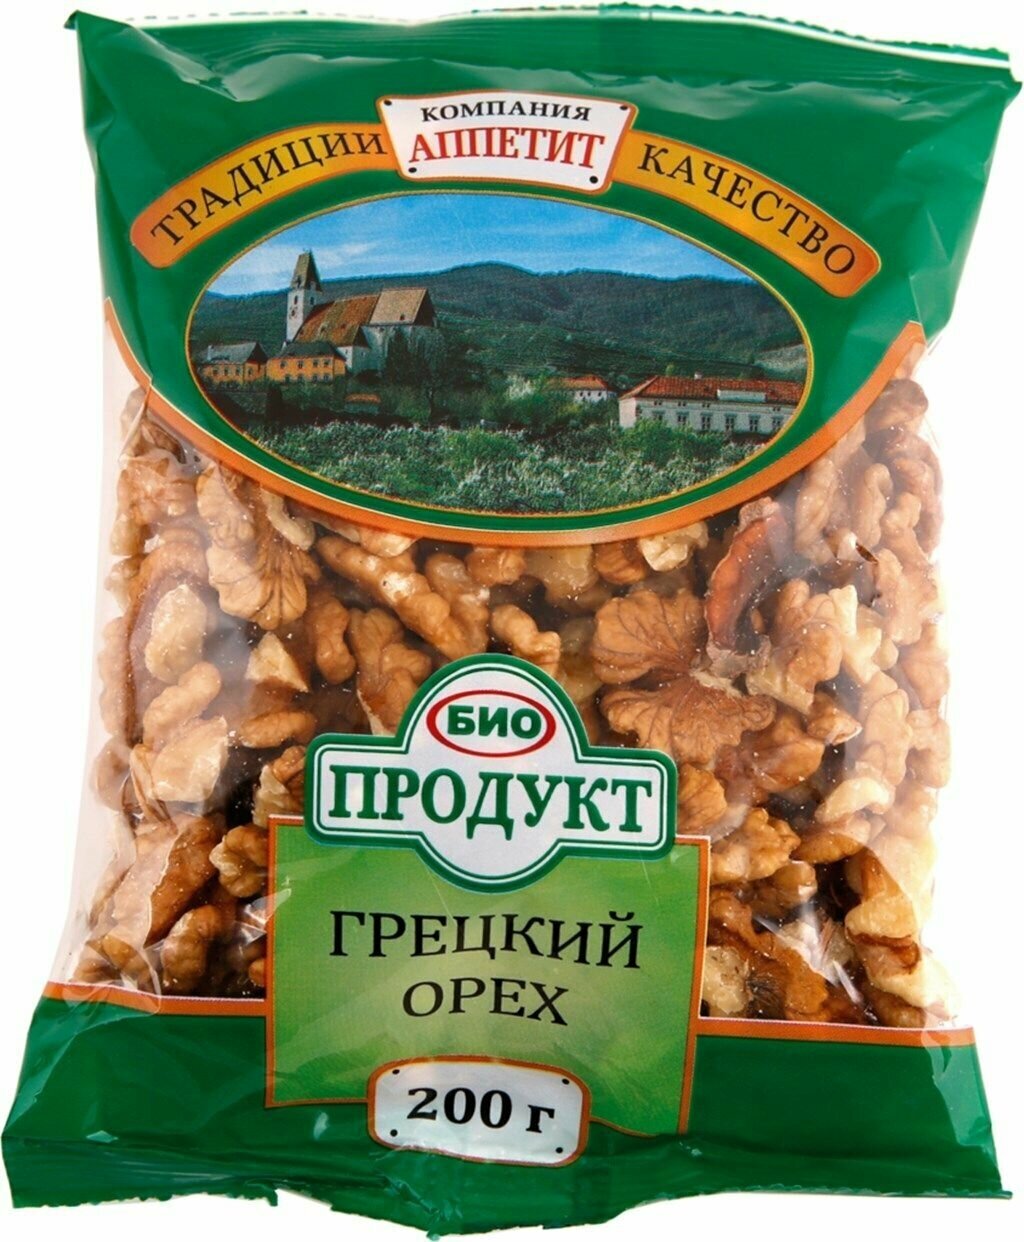 Орех грецкий биопродукт, 200 г - 2 шт.